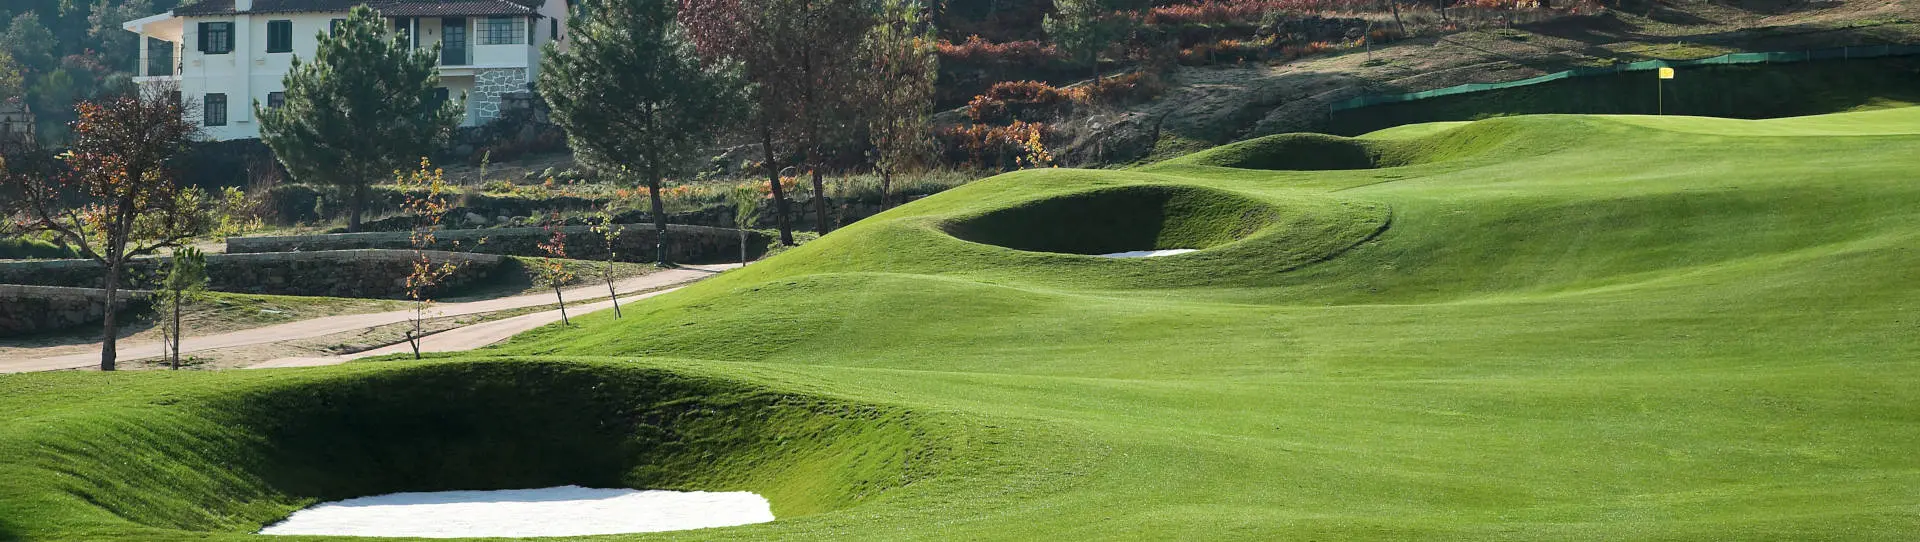 Portugal golf courses - Vidago Palace Golf - Photo 2